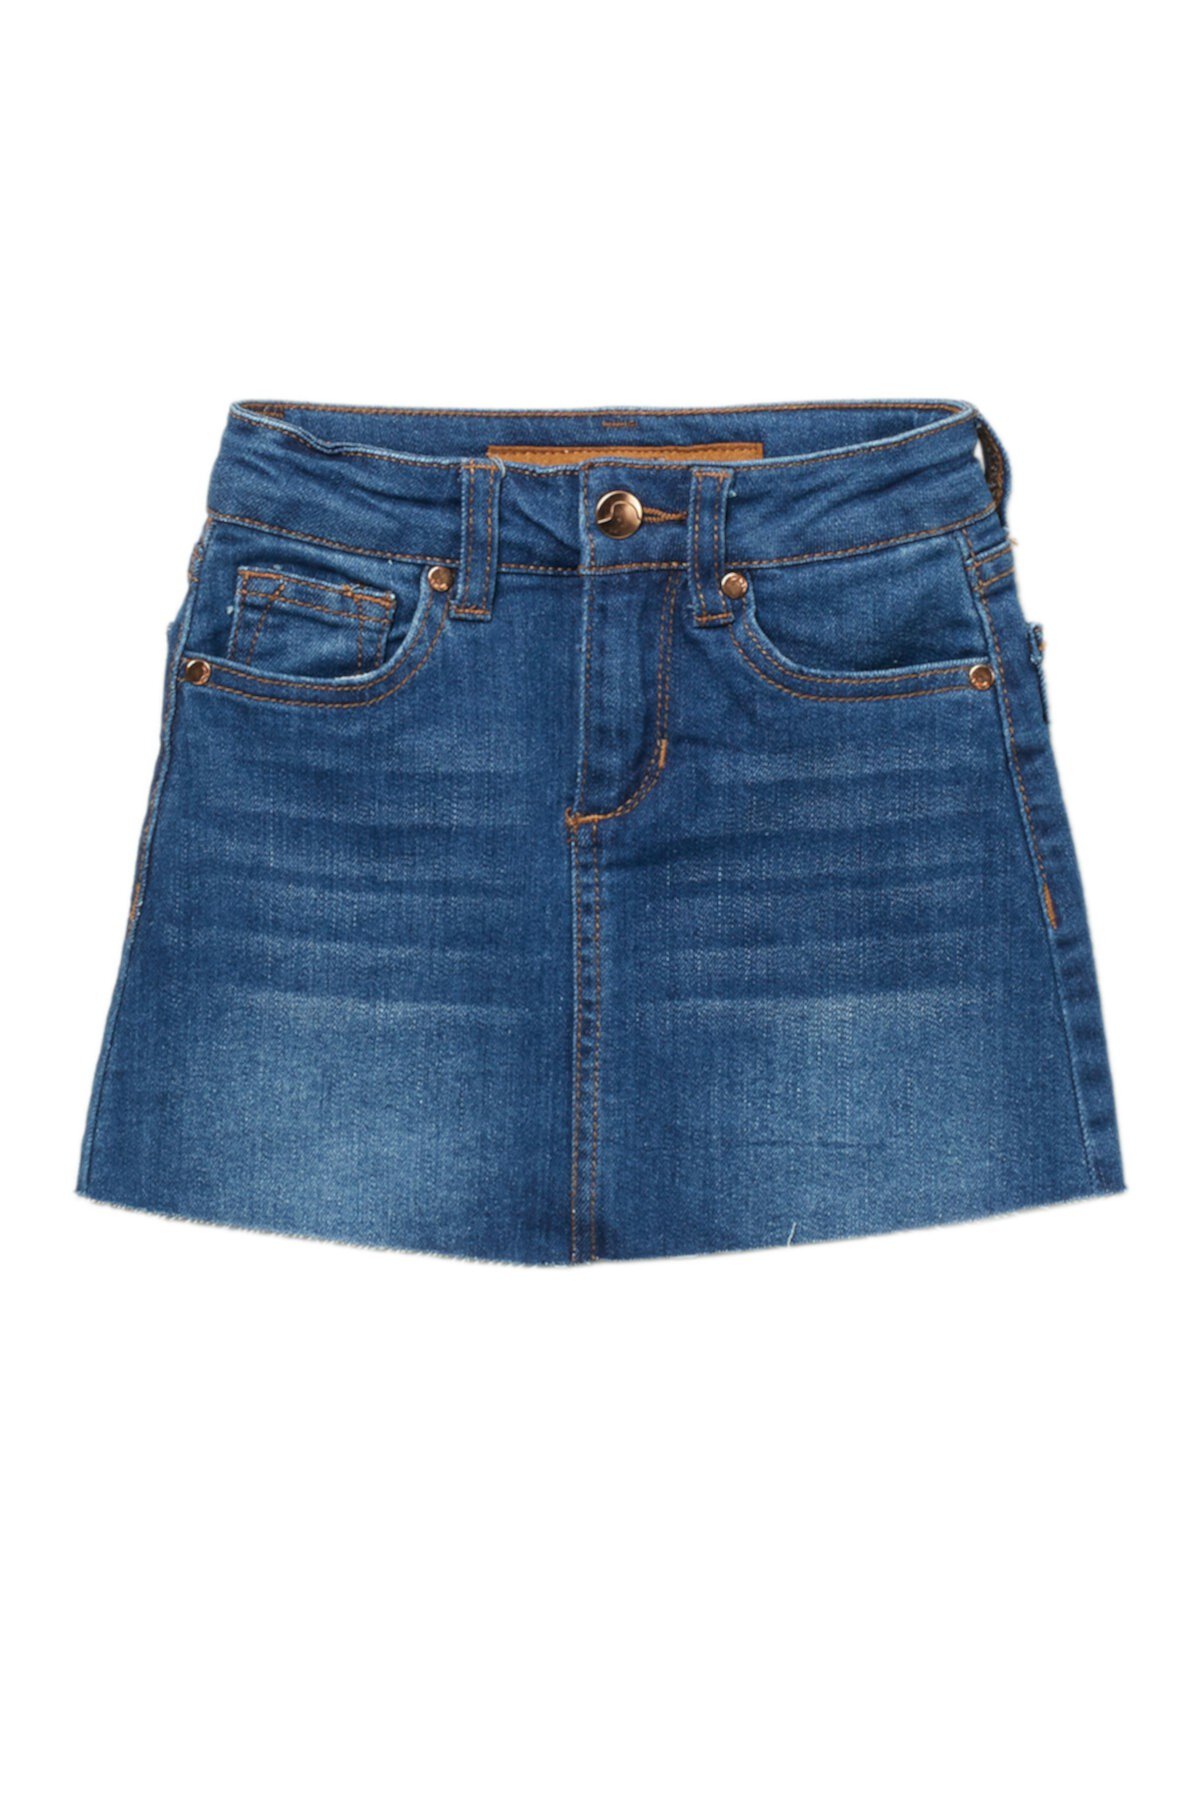 A-Line Bella Skirt (Little Girls) Joe's Jeans